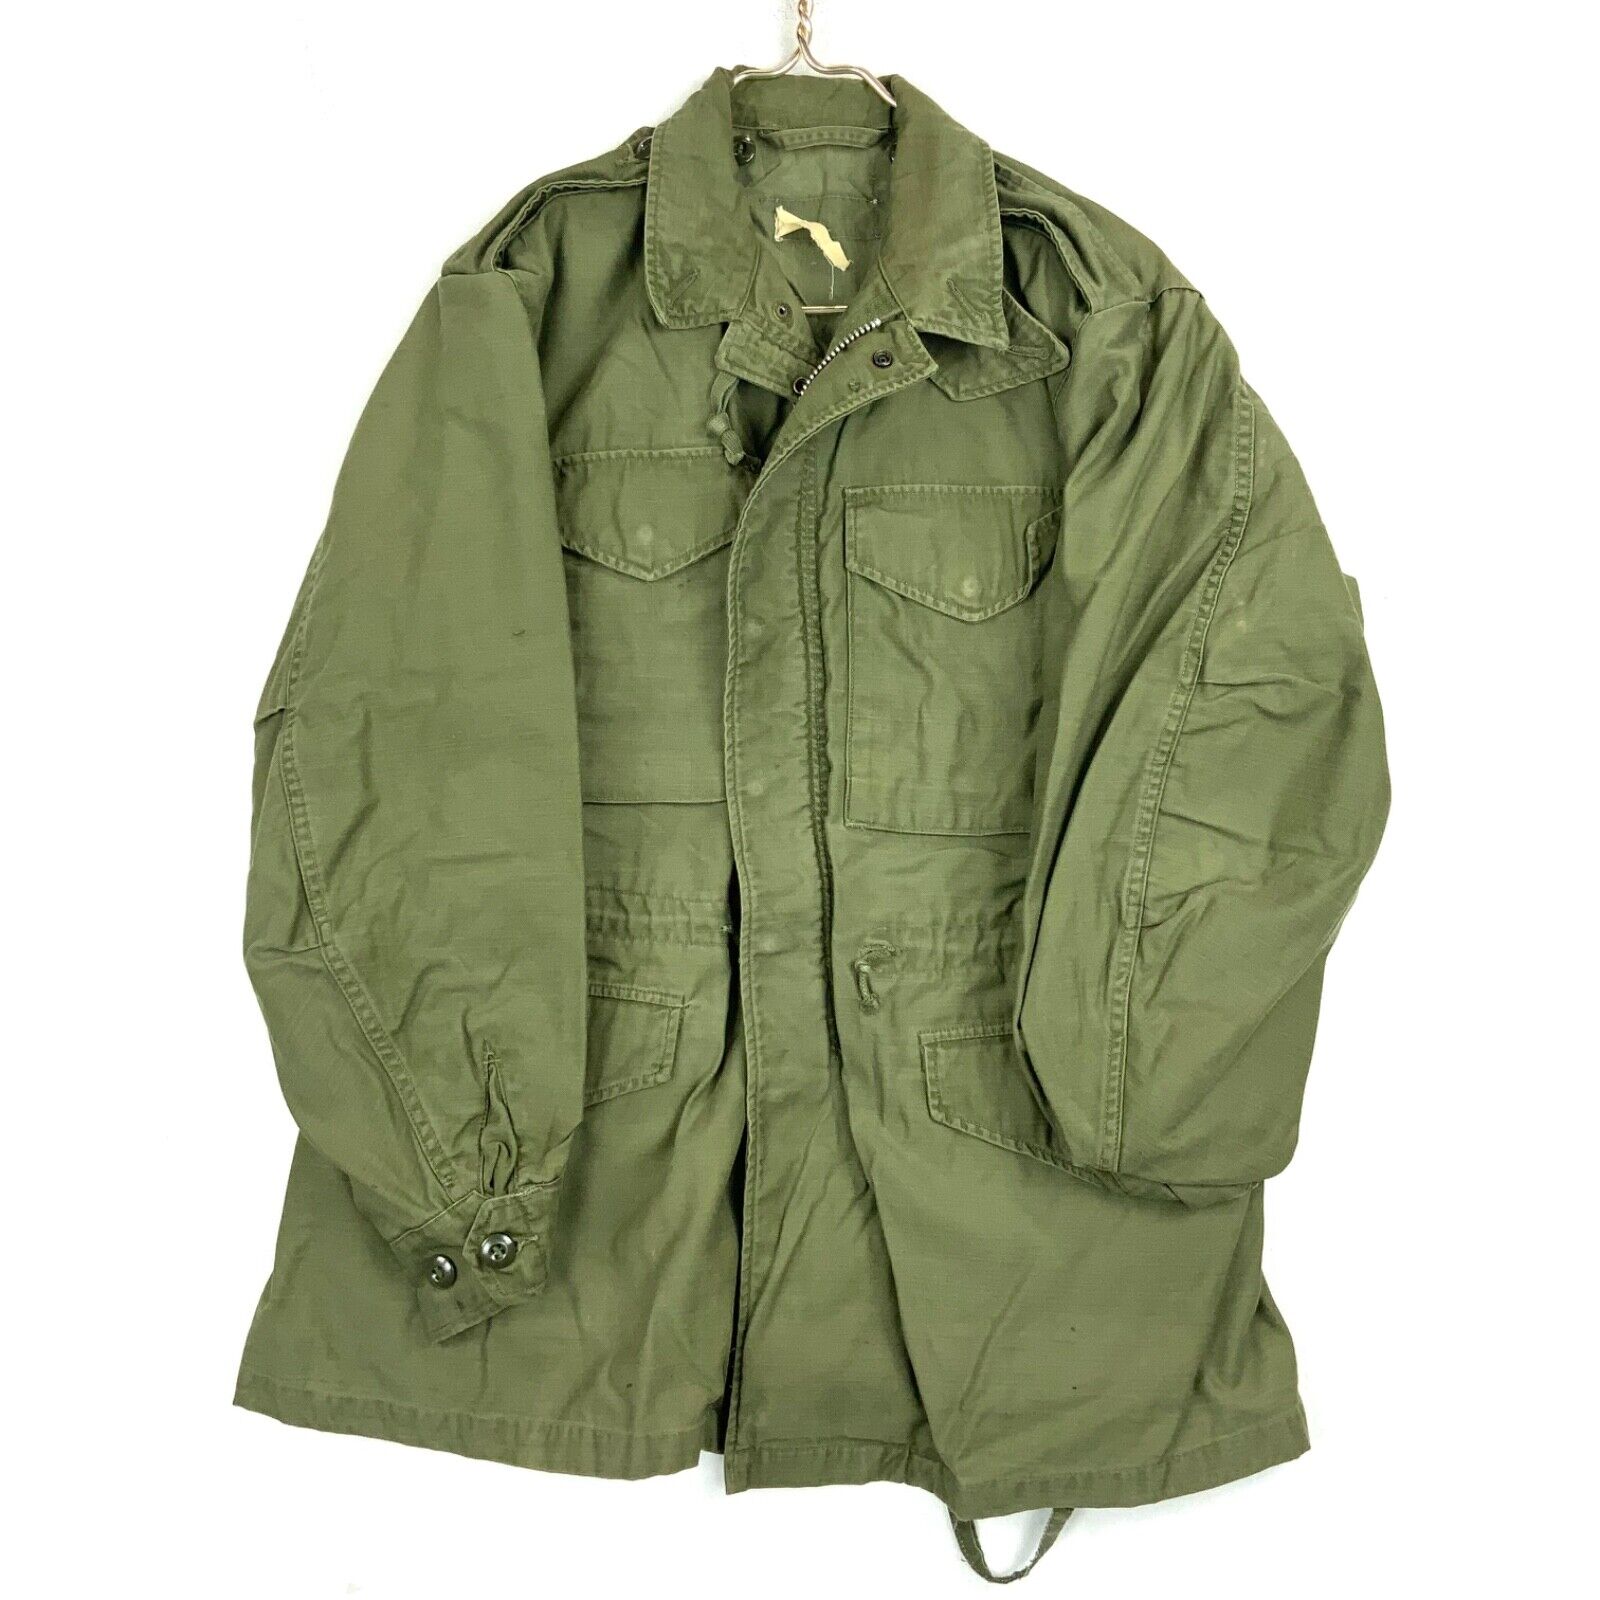 Vintage Us Military Og-107 Jacket Size Medium Green Vietnam Era 60s 70s